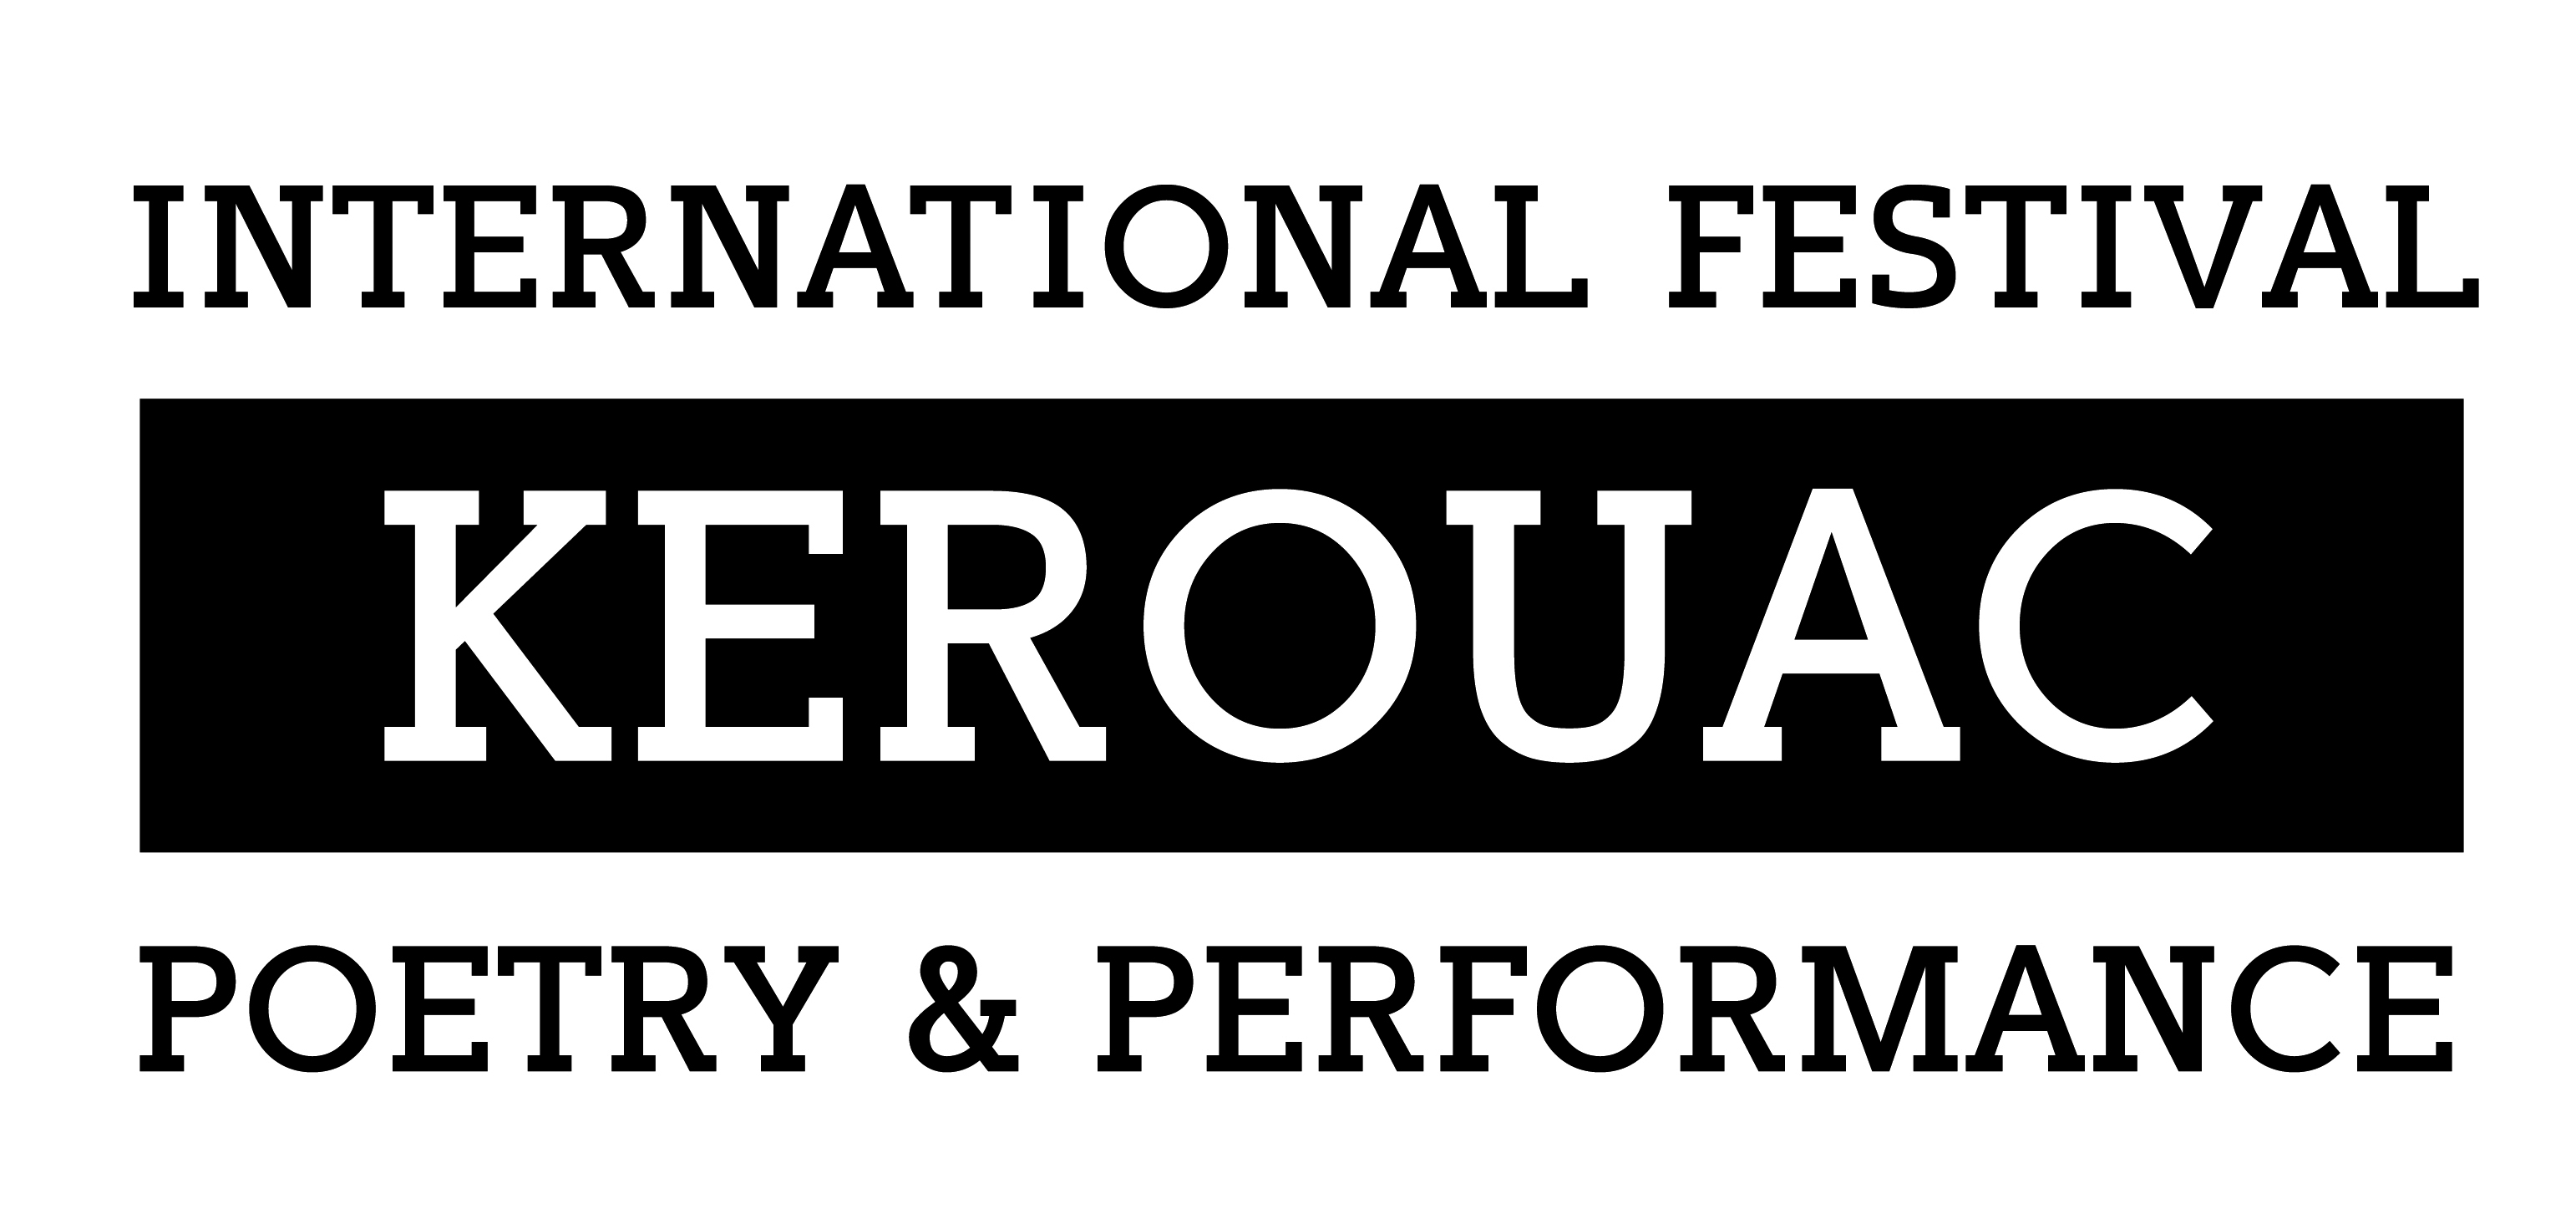 III Festival Kerouac